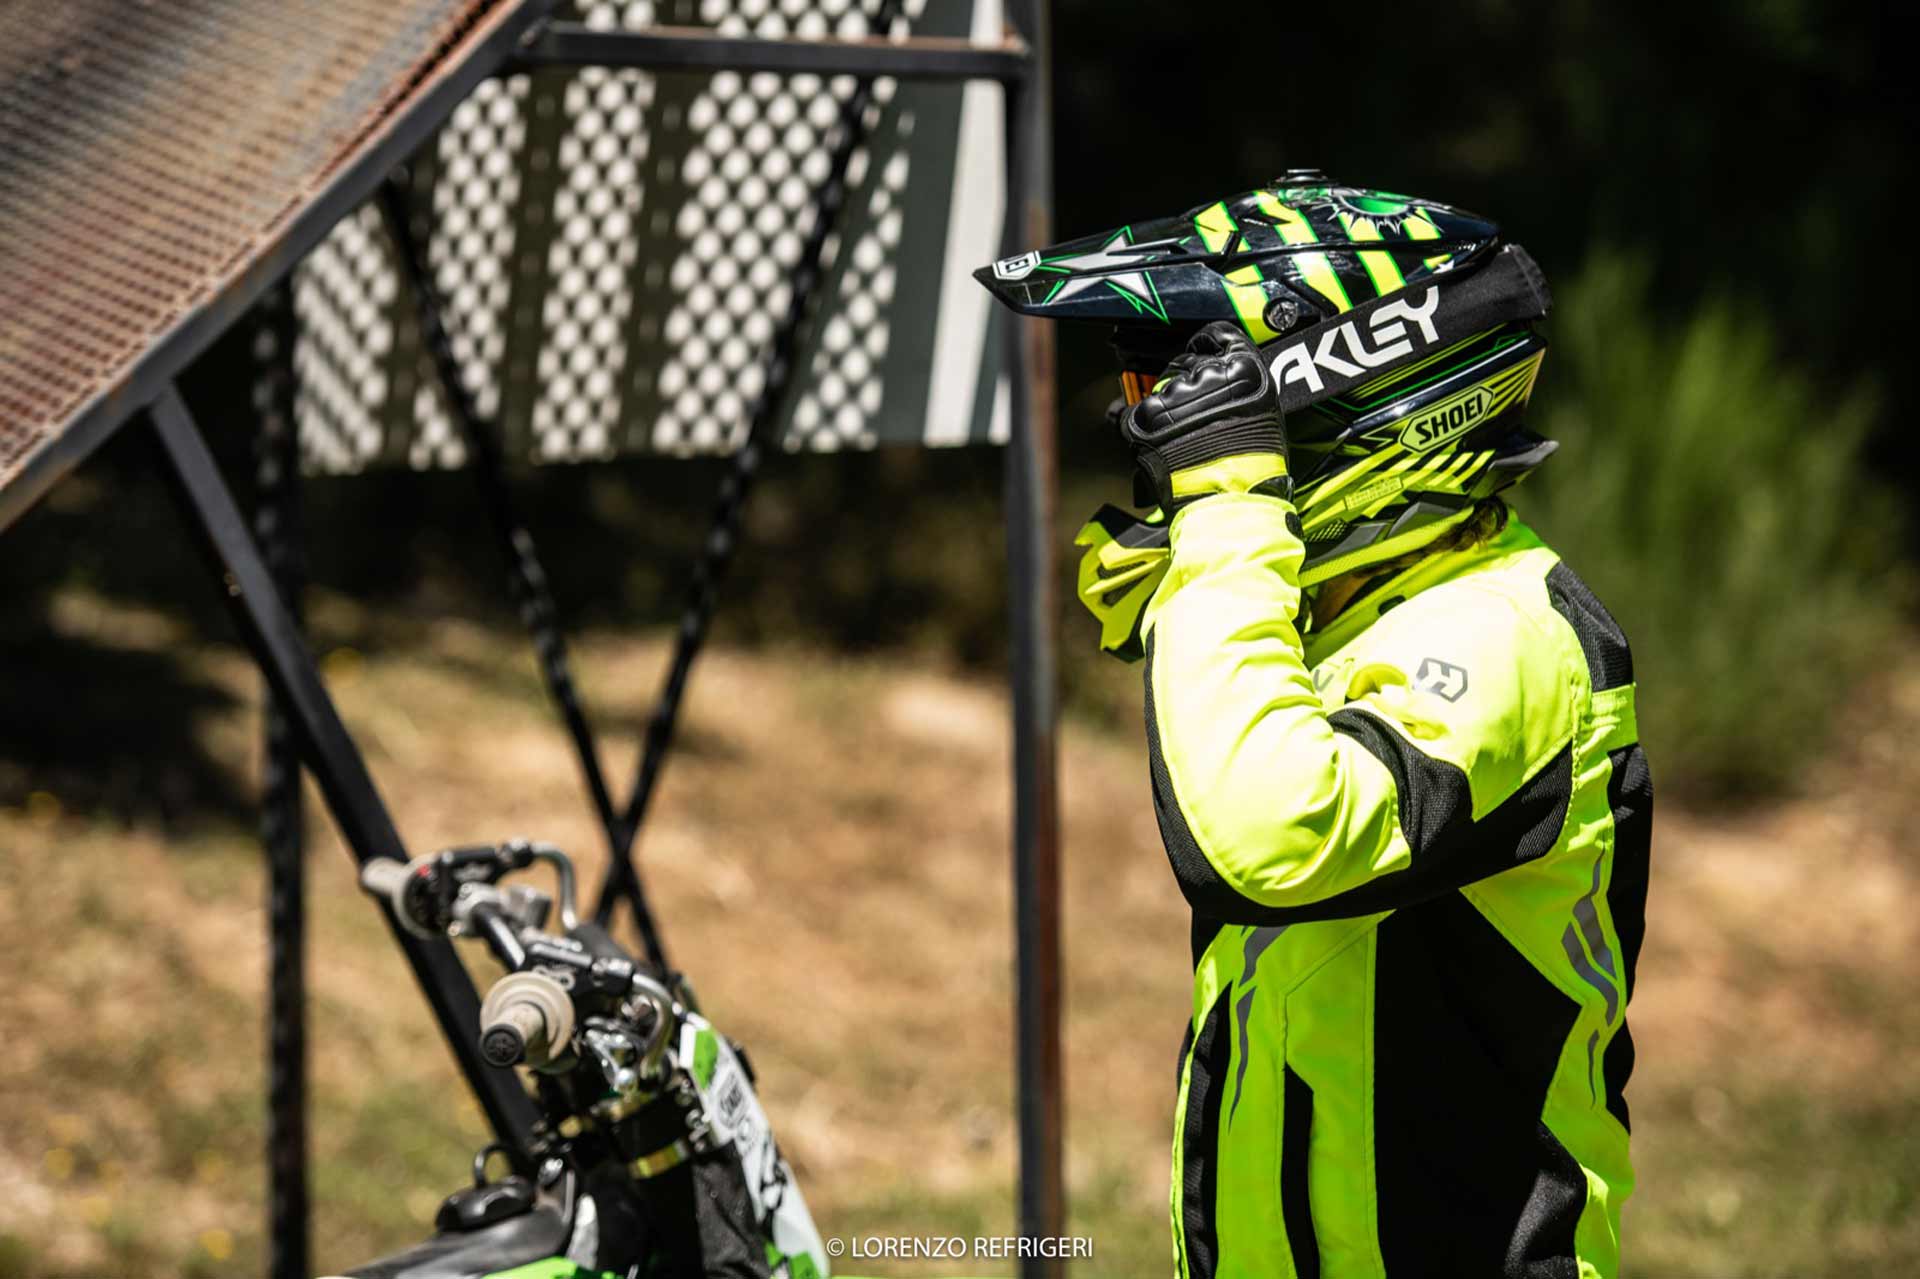 Shooting Hevik – Davide Rossi | FMX rider